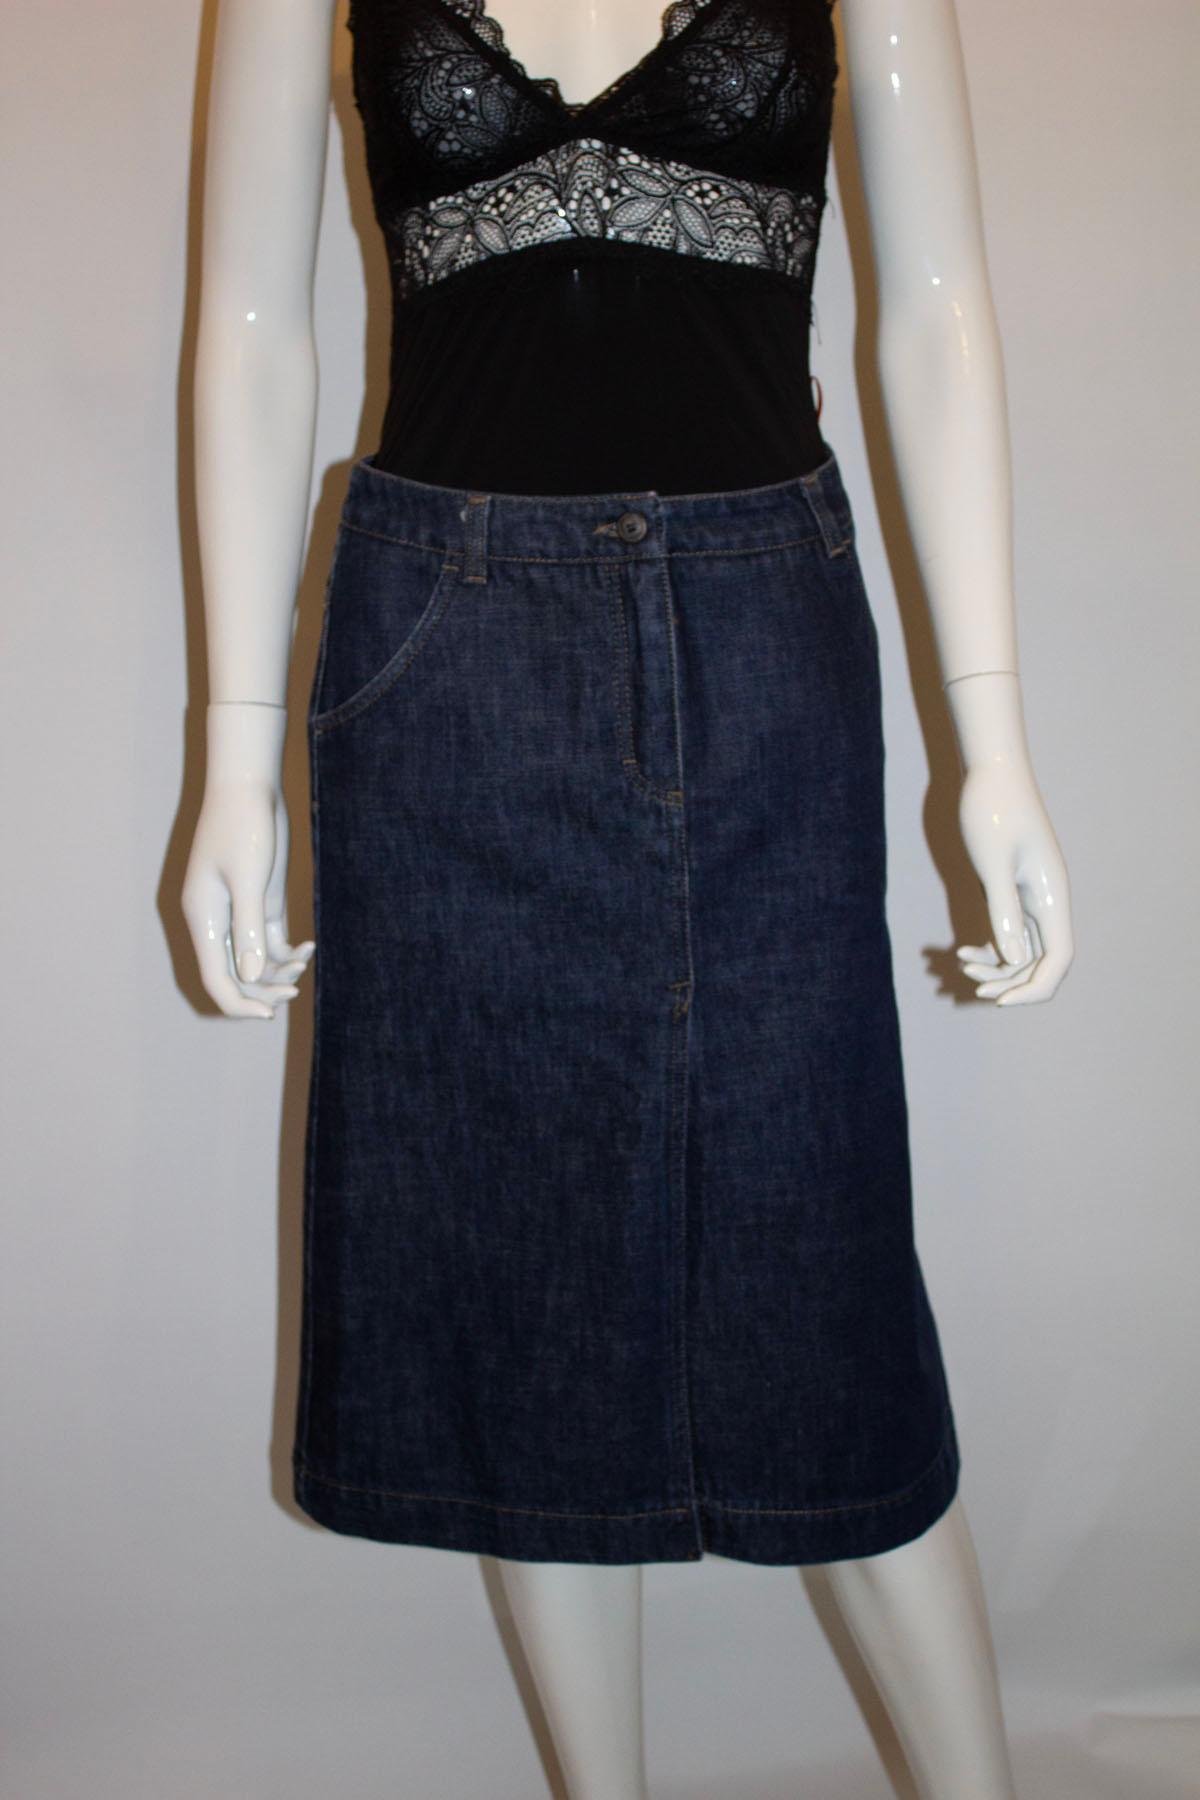 Prada , Denim Skirt In Good Condition For Sale In London, GB